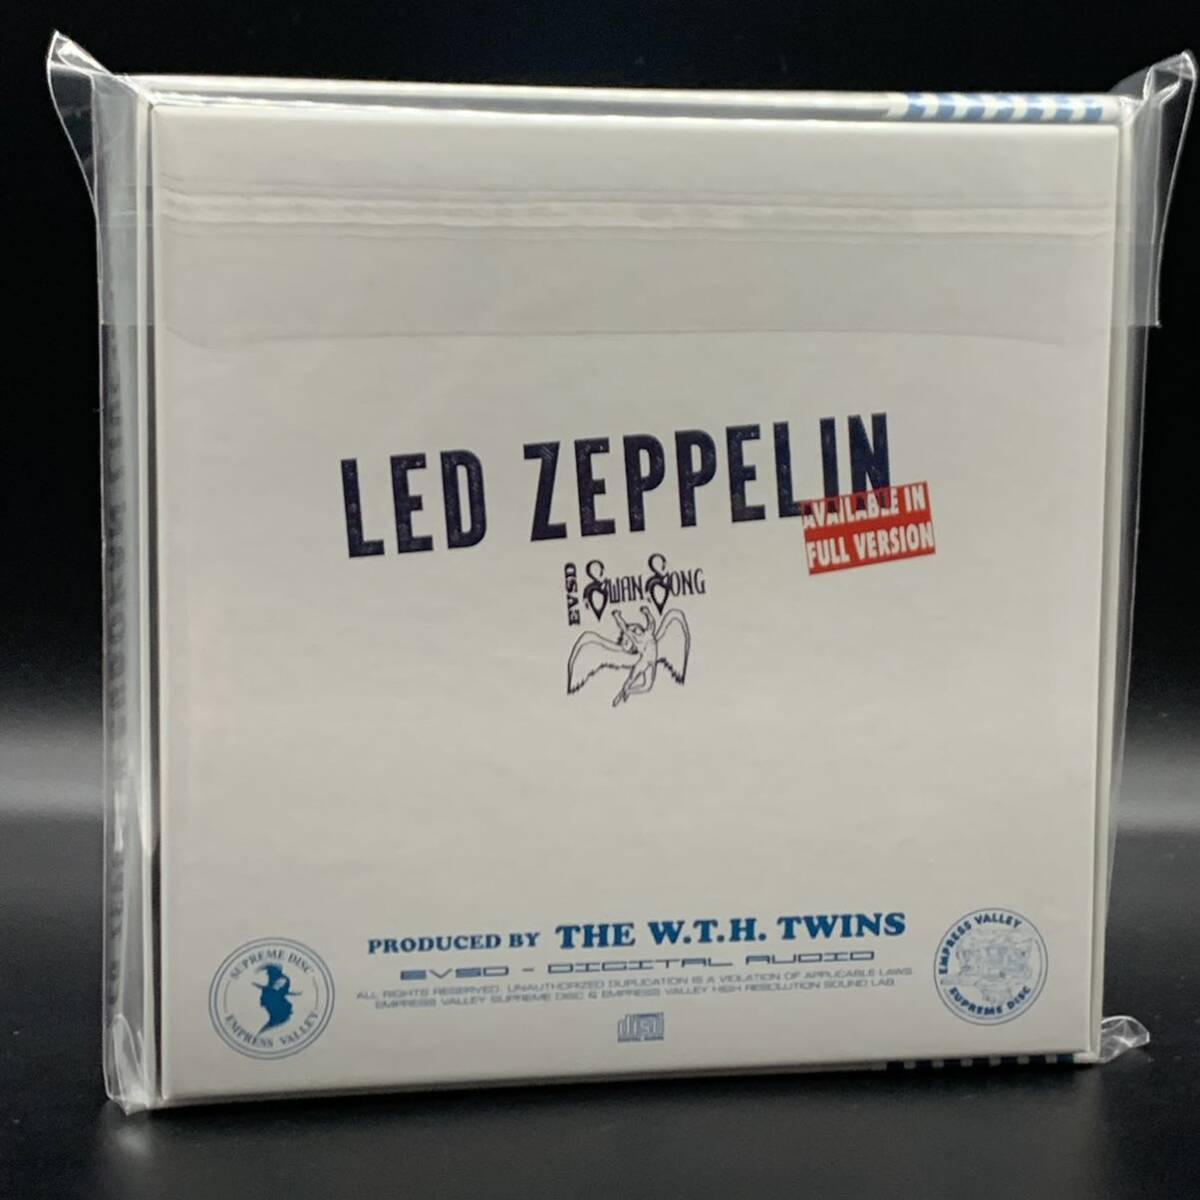 LED ZEPPELIN / LIVE AT BUDOKAN 1972「ジェット・ストリーム」(4CD BOX) 完全初登場超高音質マスター！間違いなく決定盤！完売必至！_画像2